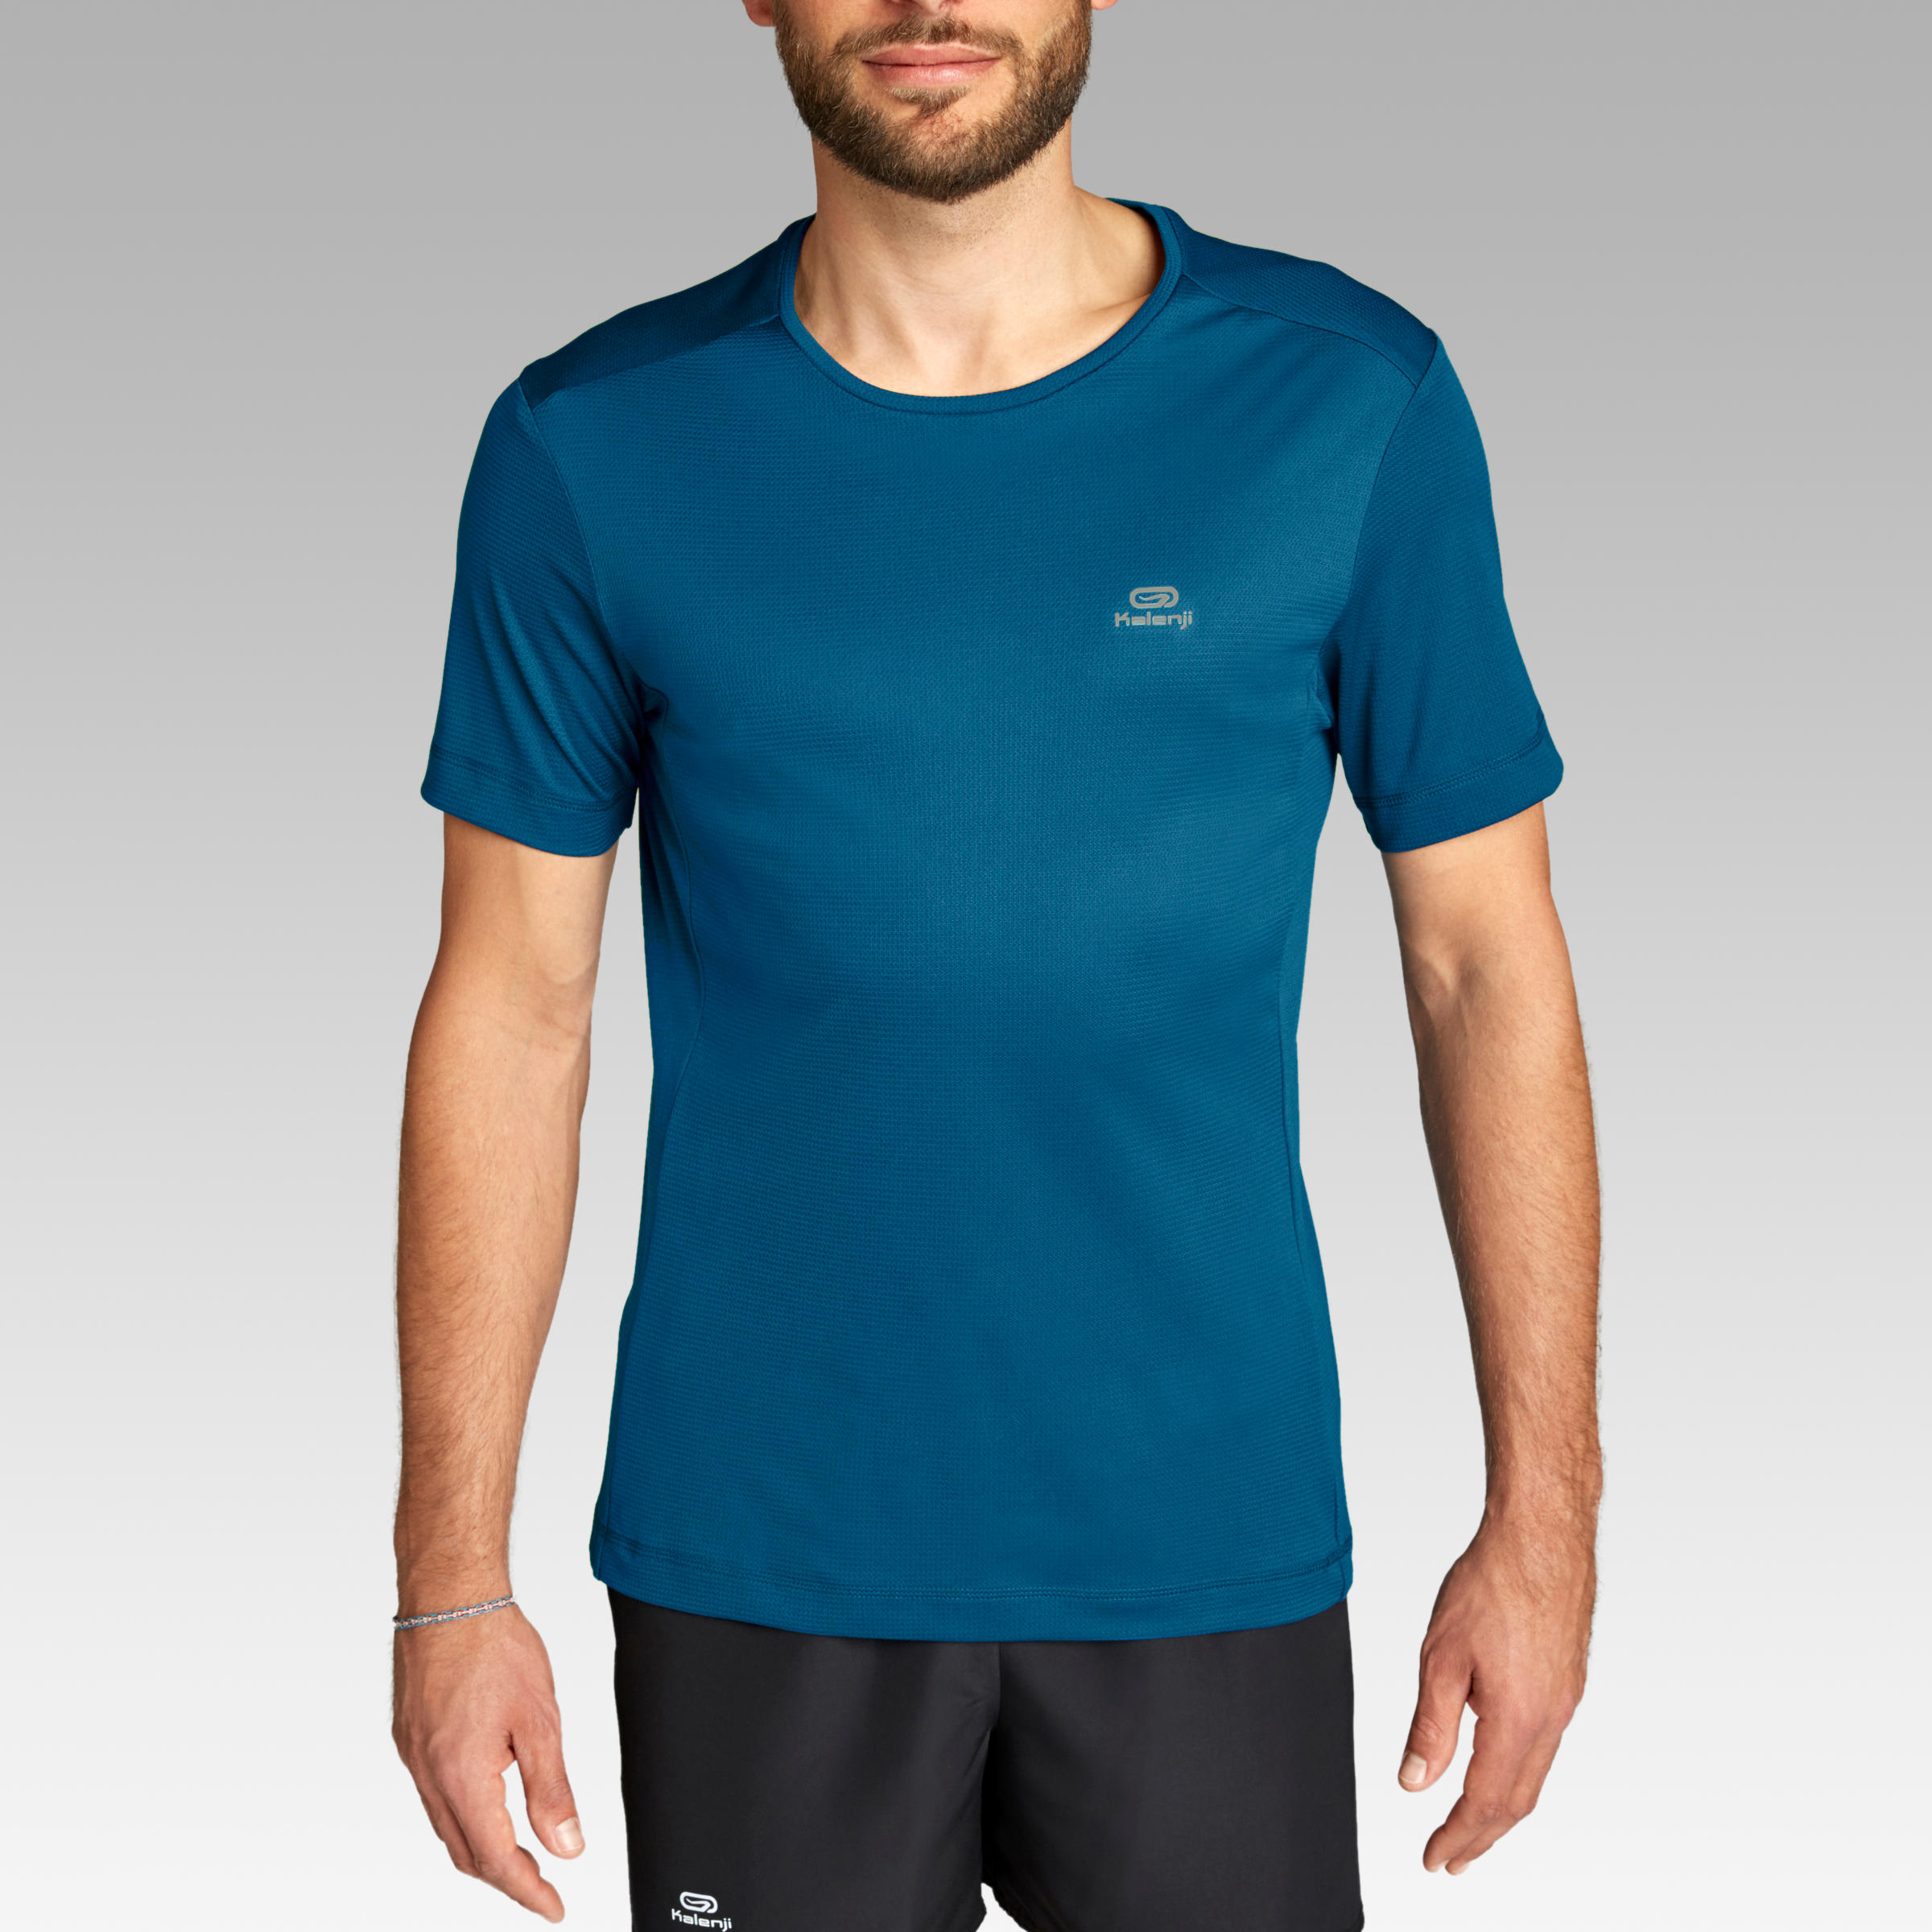 Lymio Casual Shirt for Men| Shirt for Men| Men Stylish Shirt | Men Printed  Shirt (Squre) (S, Blue) : Amazon.in: Clothing & Accessories